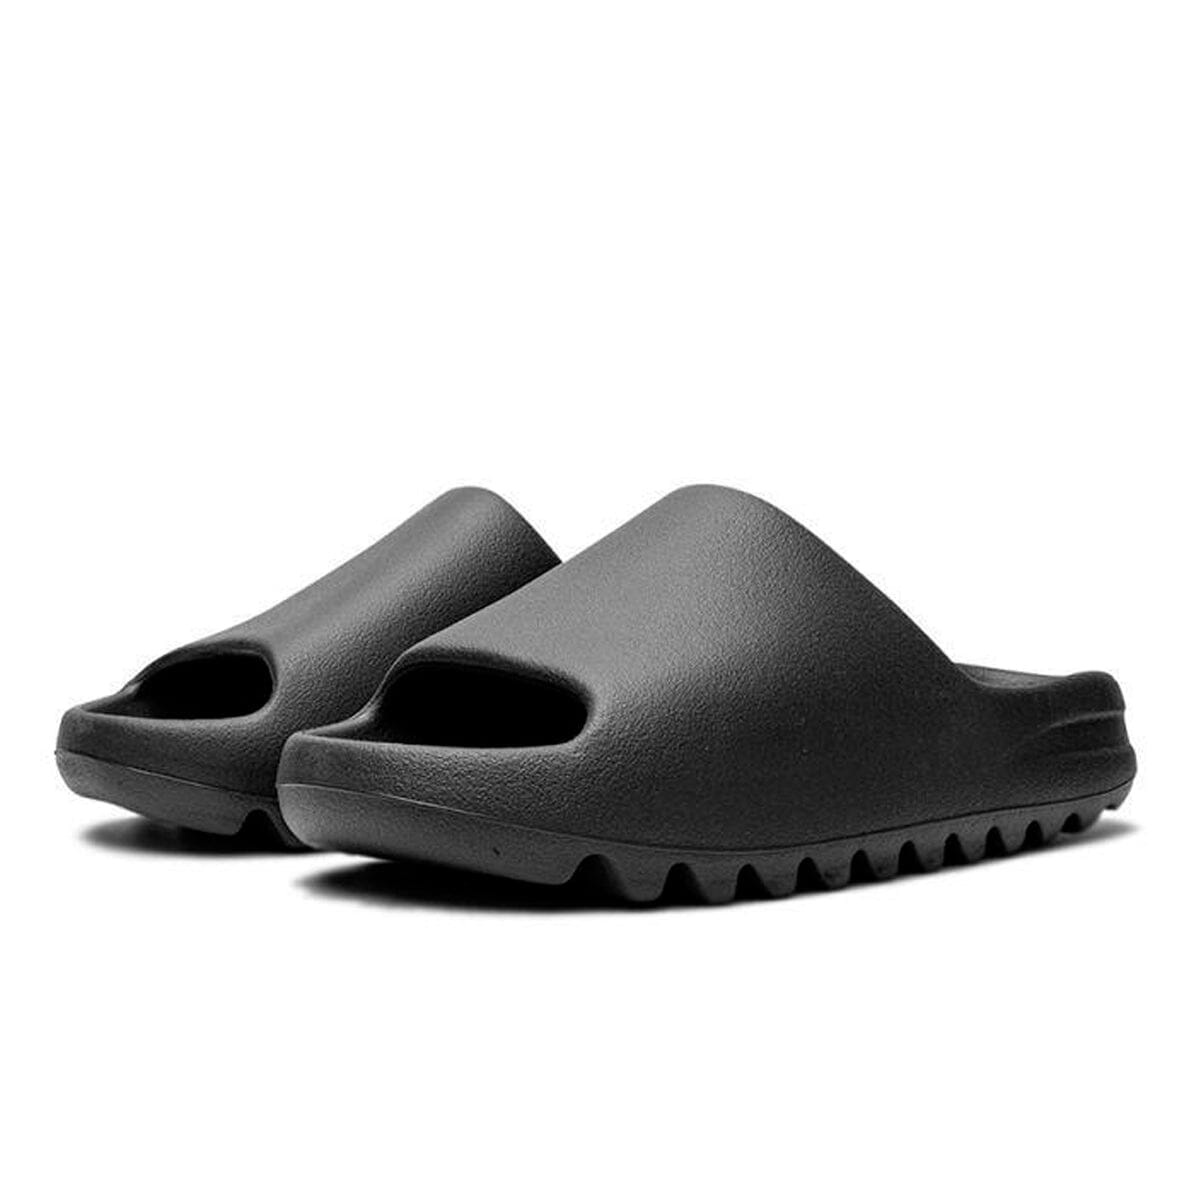 Adidas Yeezy Slide Onyx Black Yeezy Slide Blizz Sneakers 